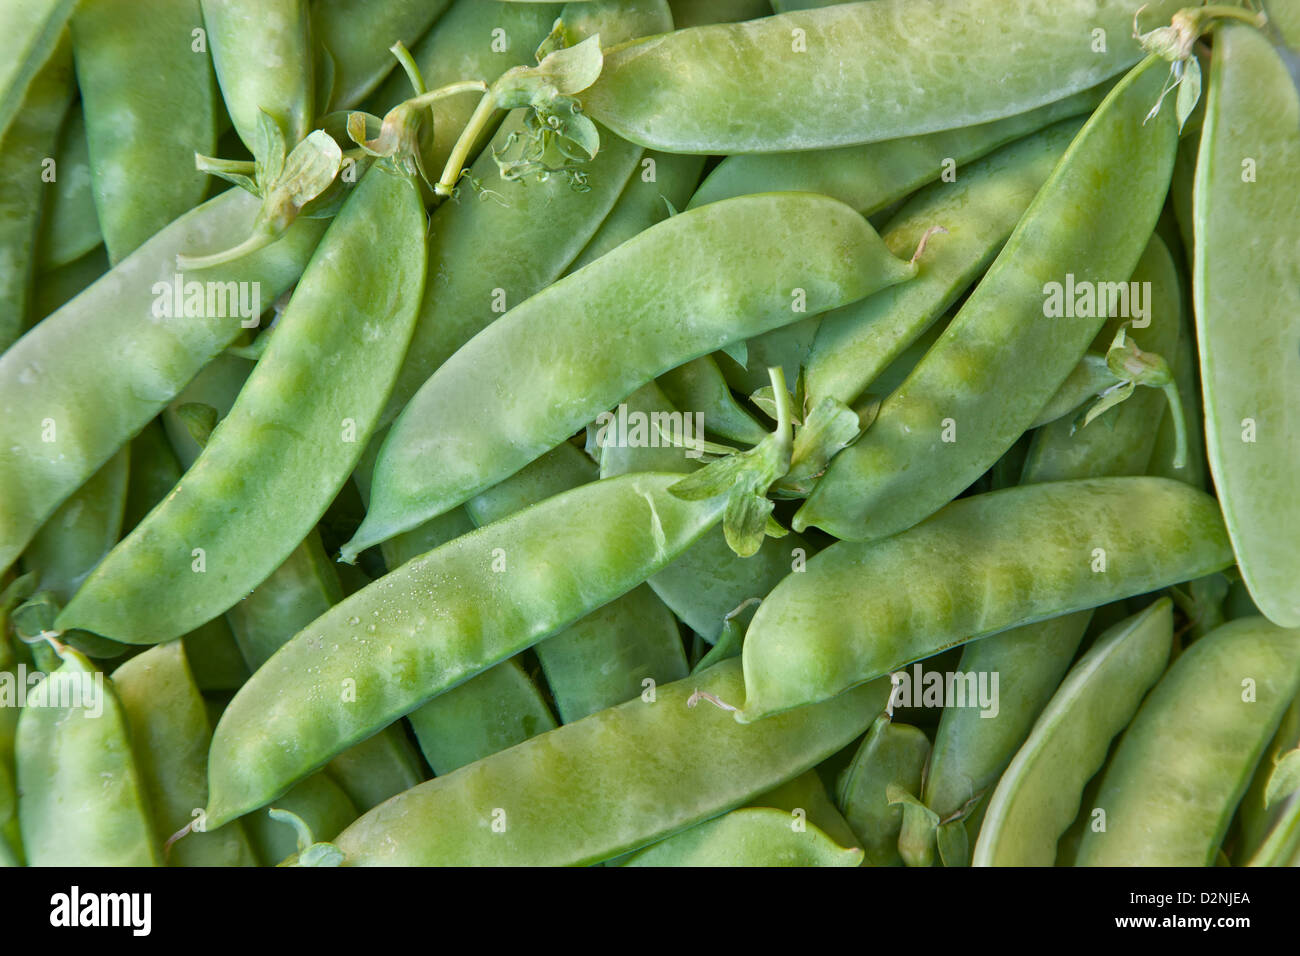 Harvested pea pods, 'Pisum sativum'. Stock Photo